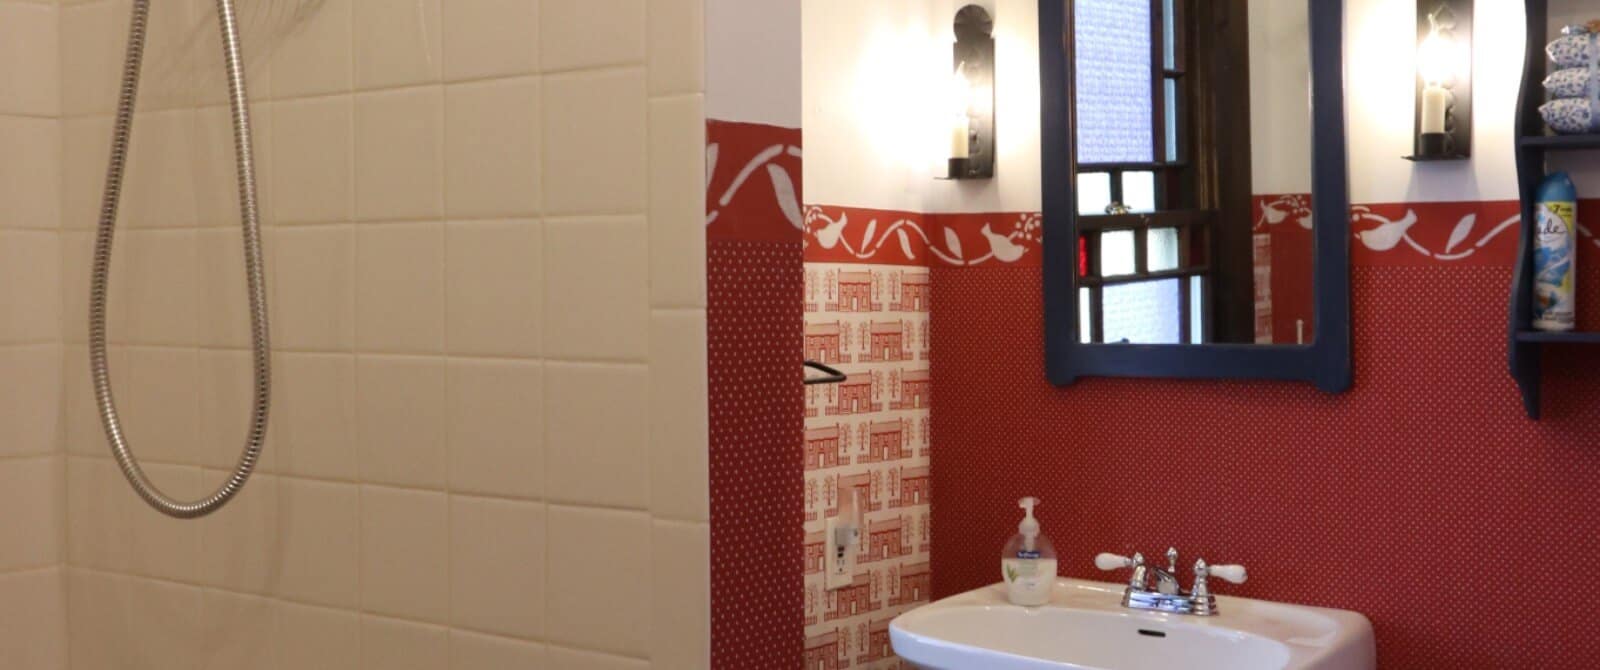 Bathroom with pedestal sink, blue framed mirror, red wallpaper and tiled shower